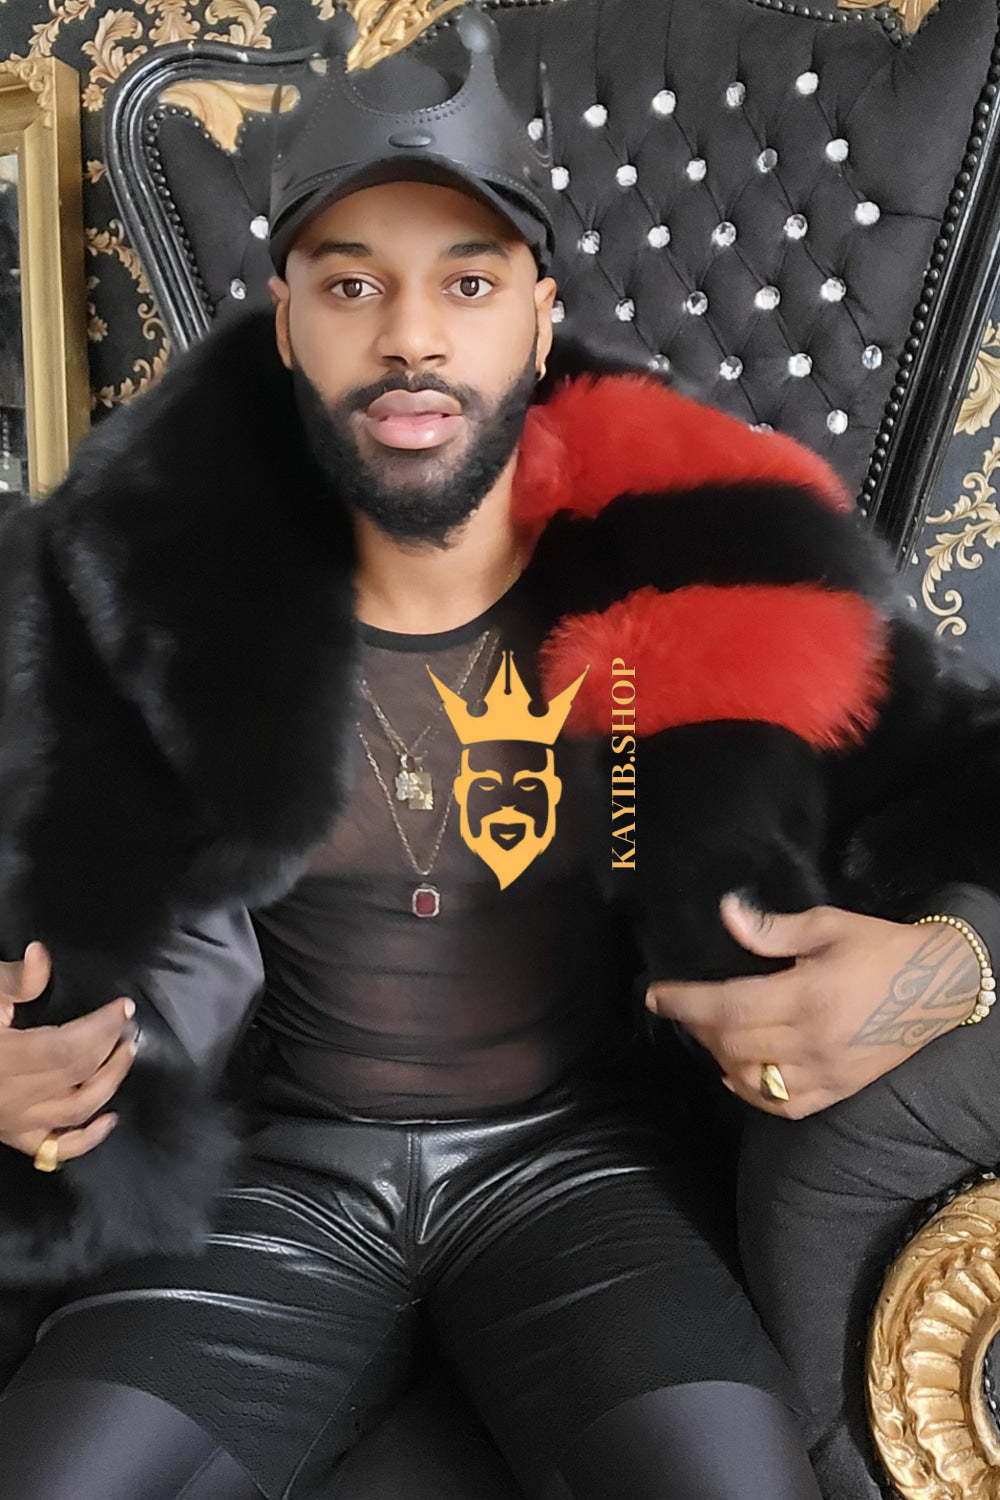 Handmade Luxurious Real Fox Fur Coats for Men and Women | Premium Winter Fashion - kayibstrore